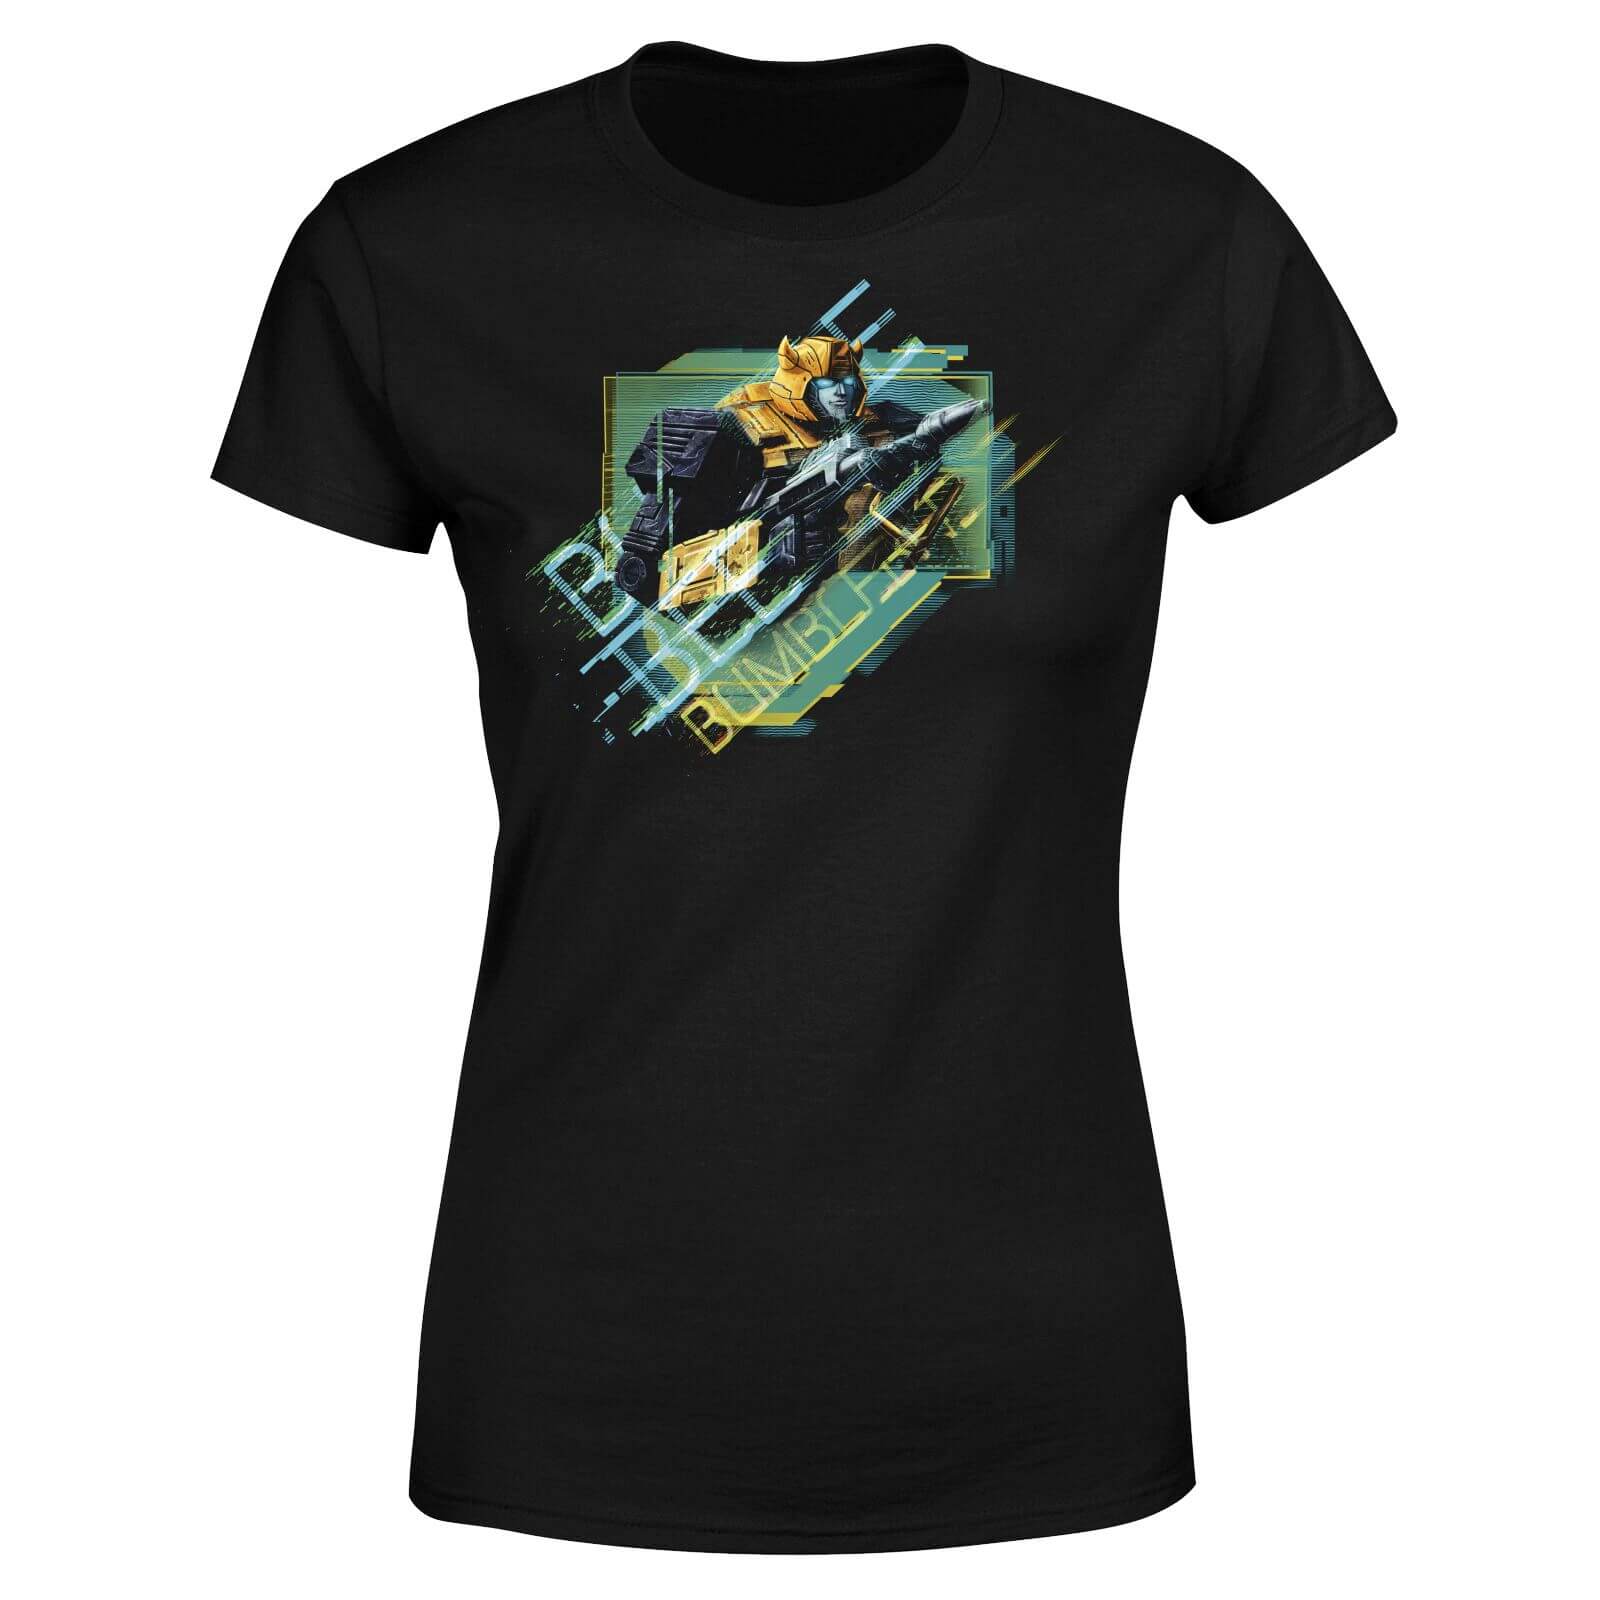 Transformers Bumble Bee Glitch Women's T-Shirt - Black - S - Black